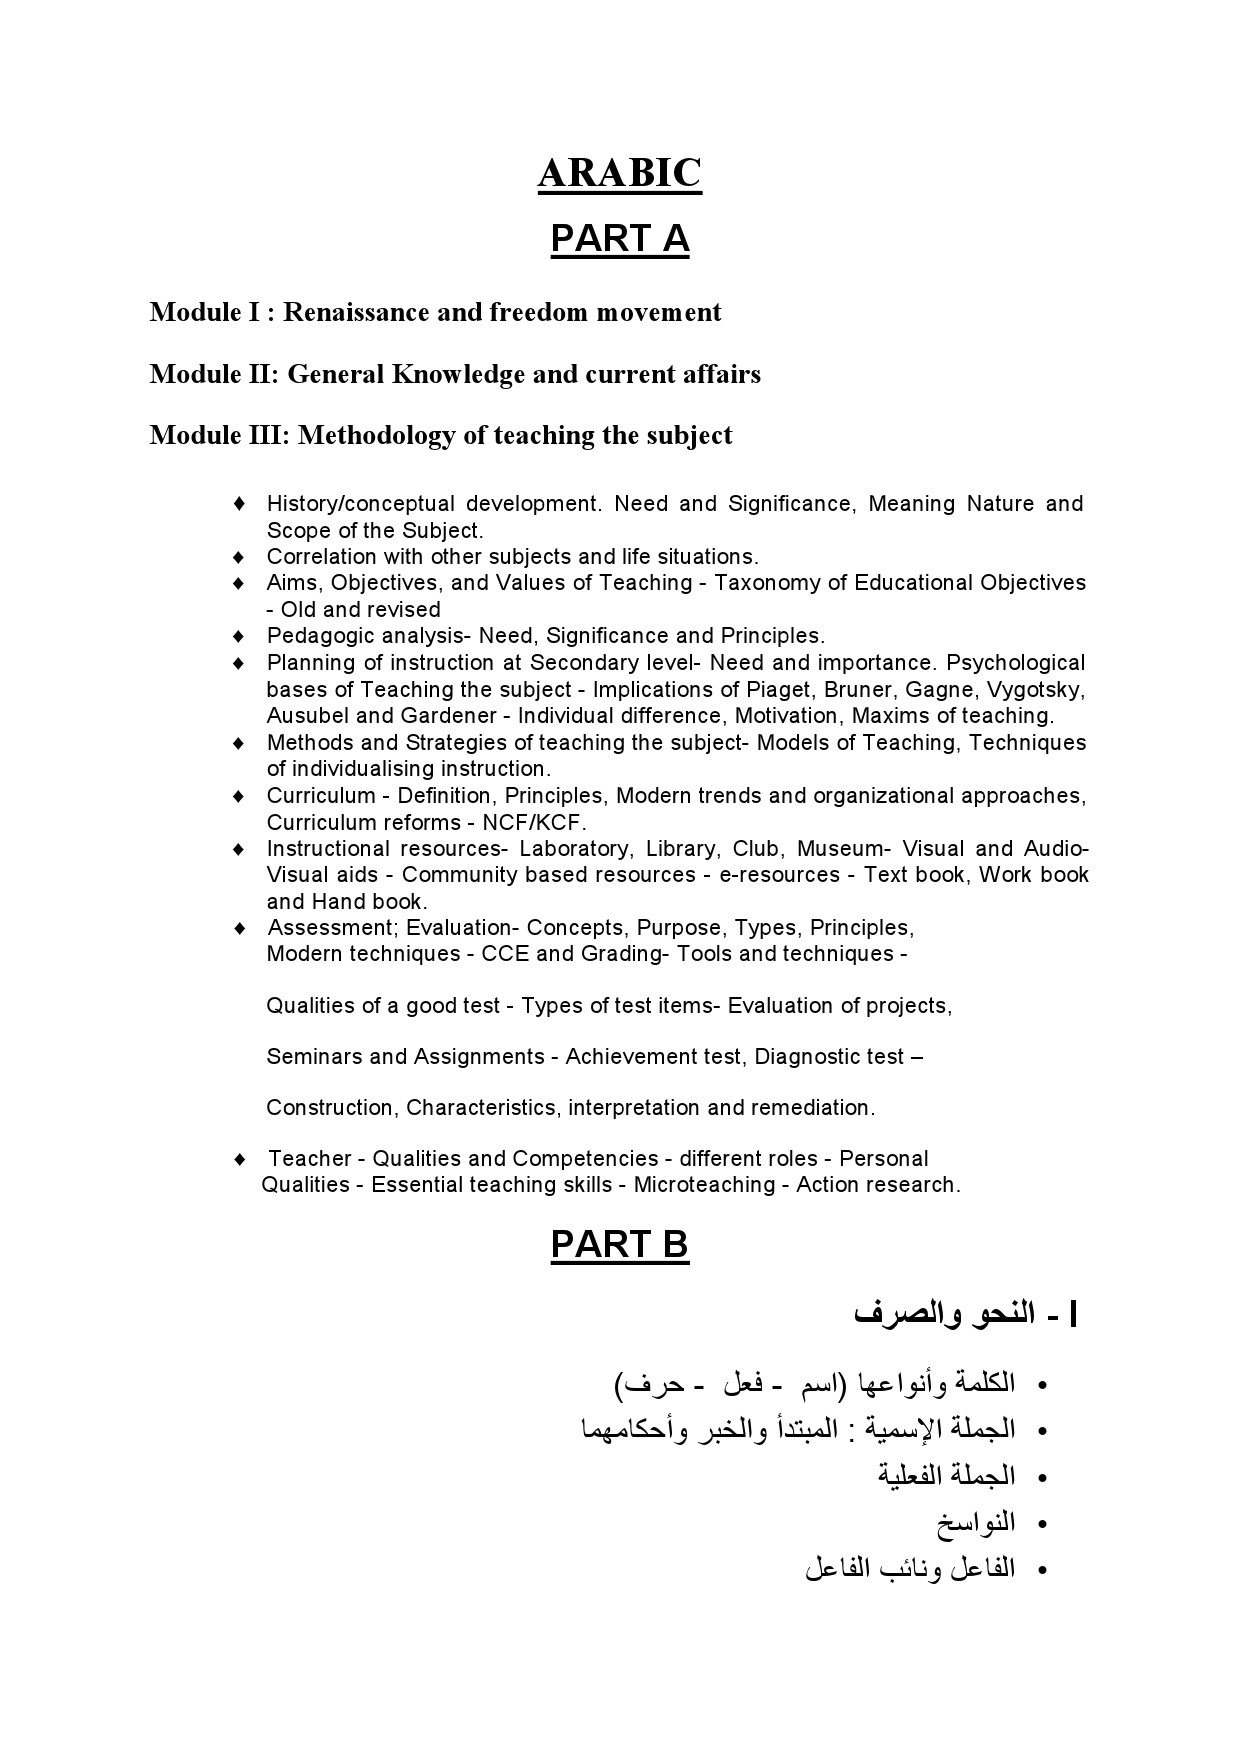 High School Assistant Arabic Kerala Examination Syllabus 2021 - Notification Image 1